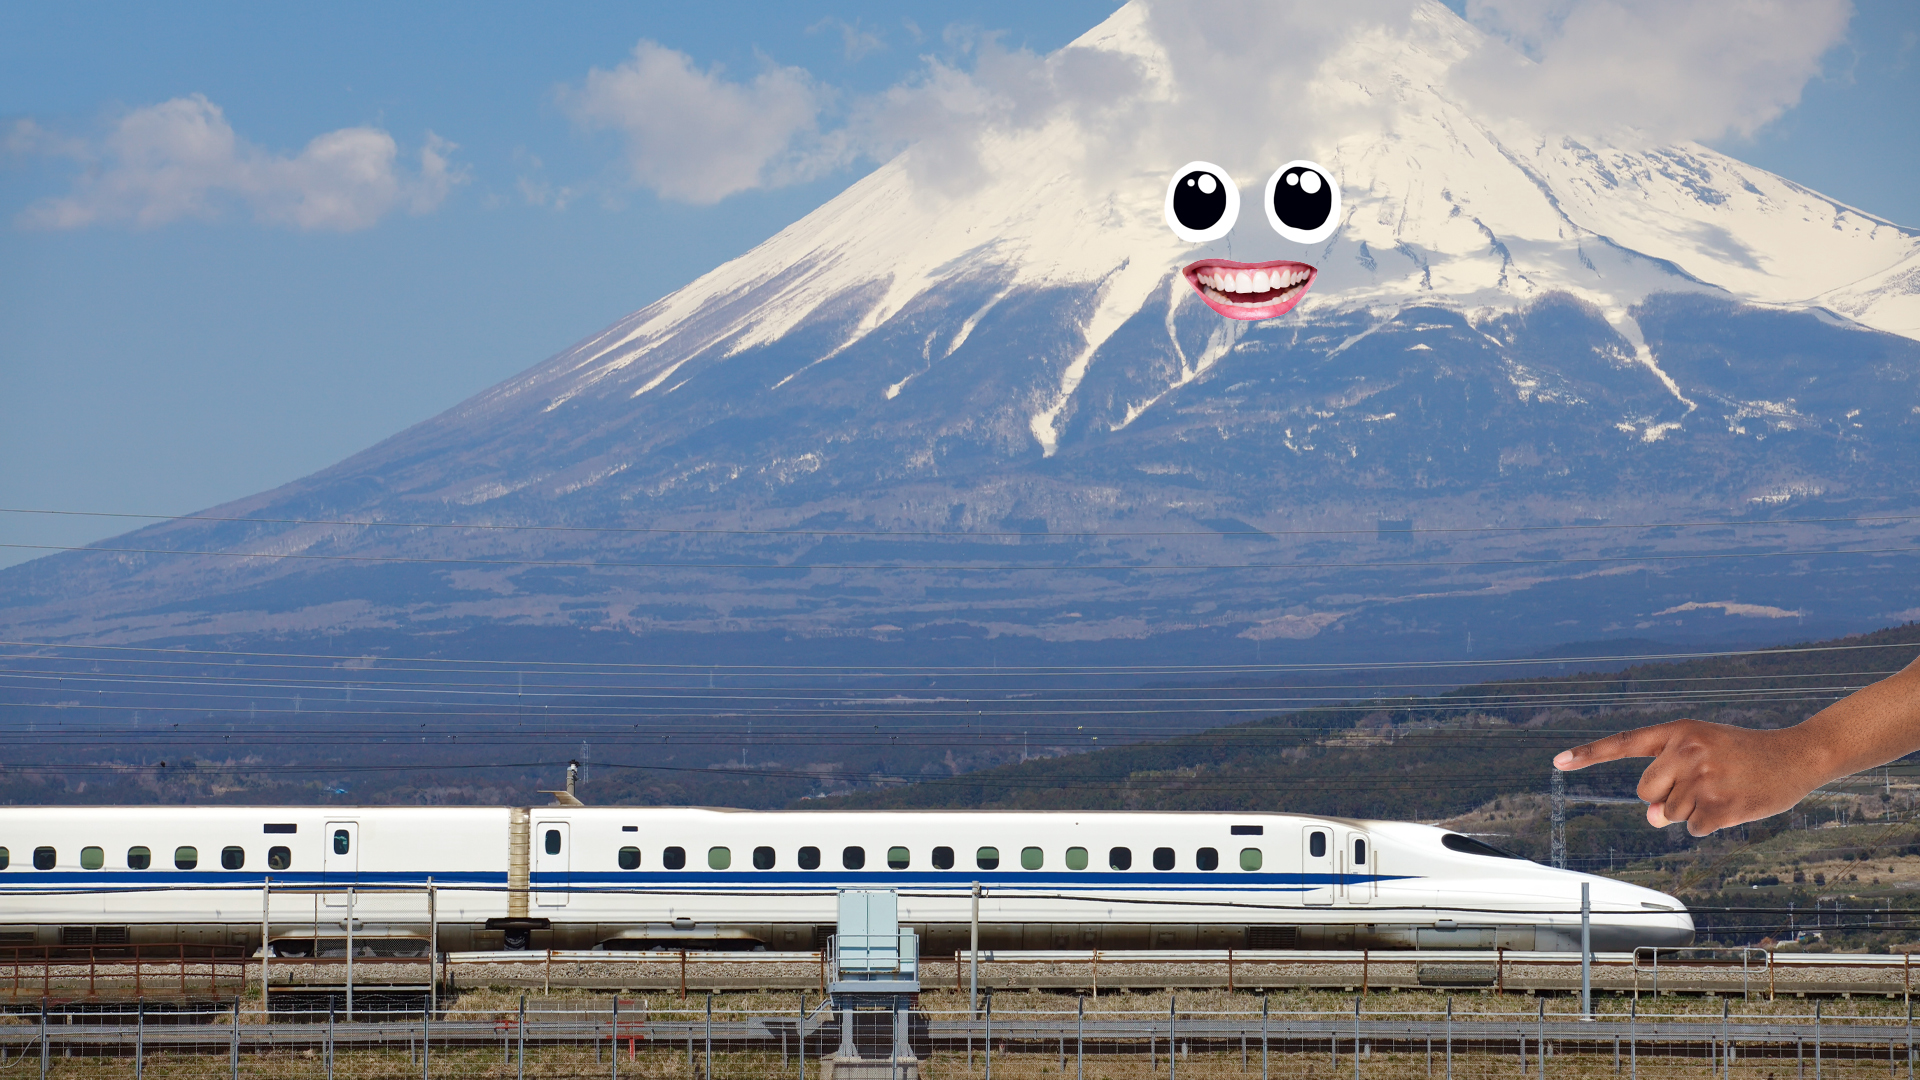 Japan's high-speed train